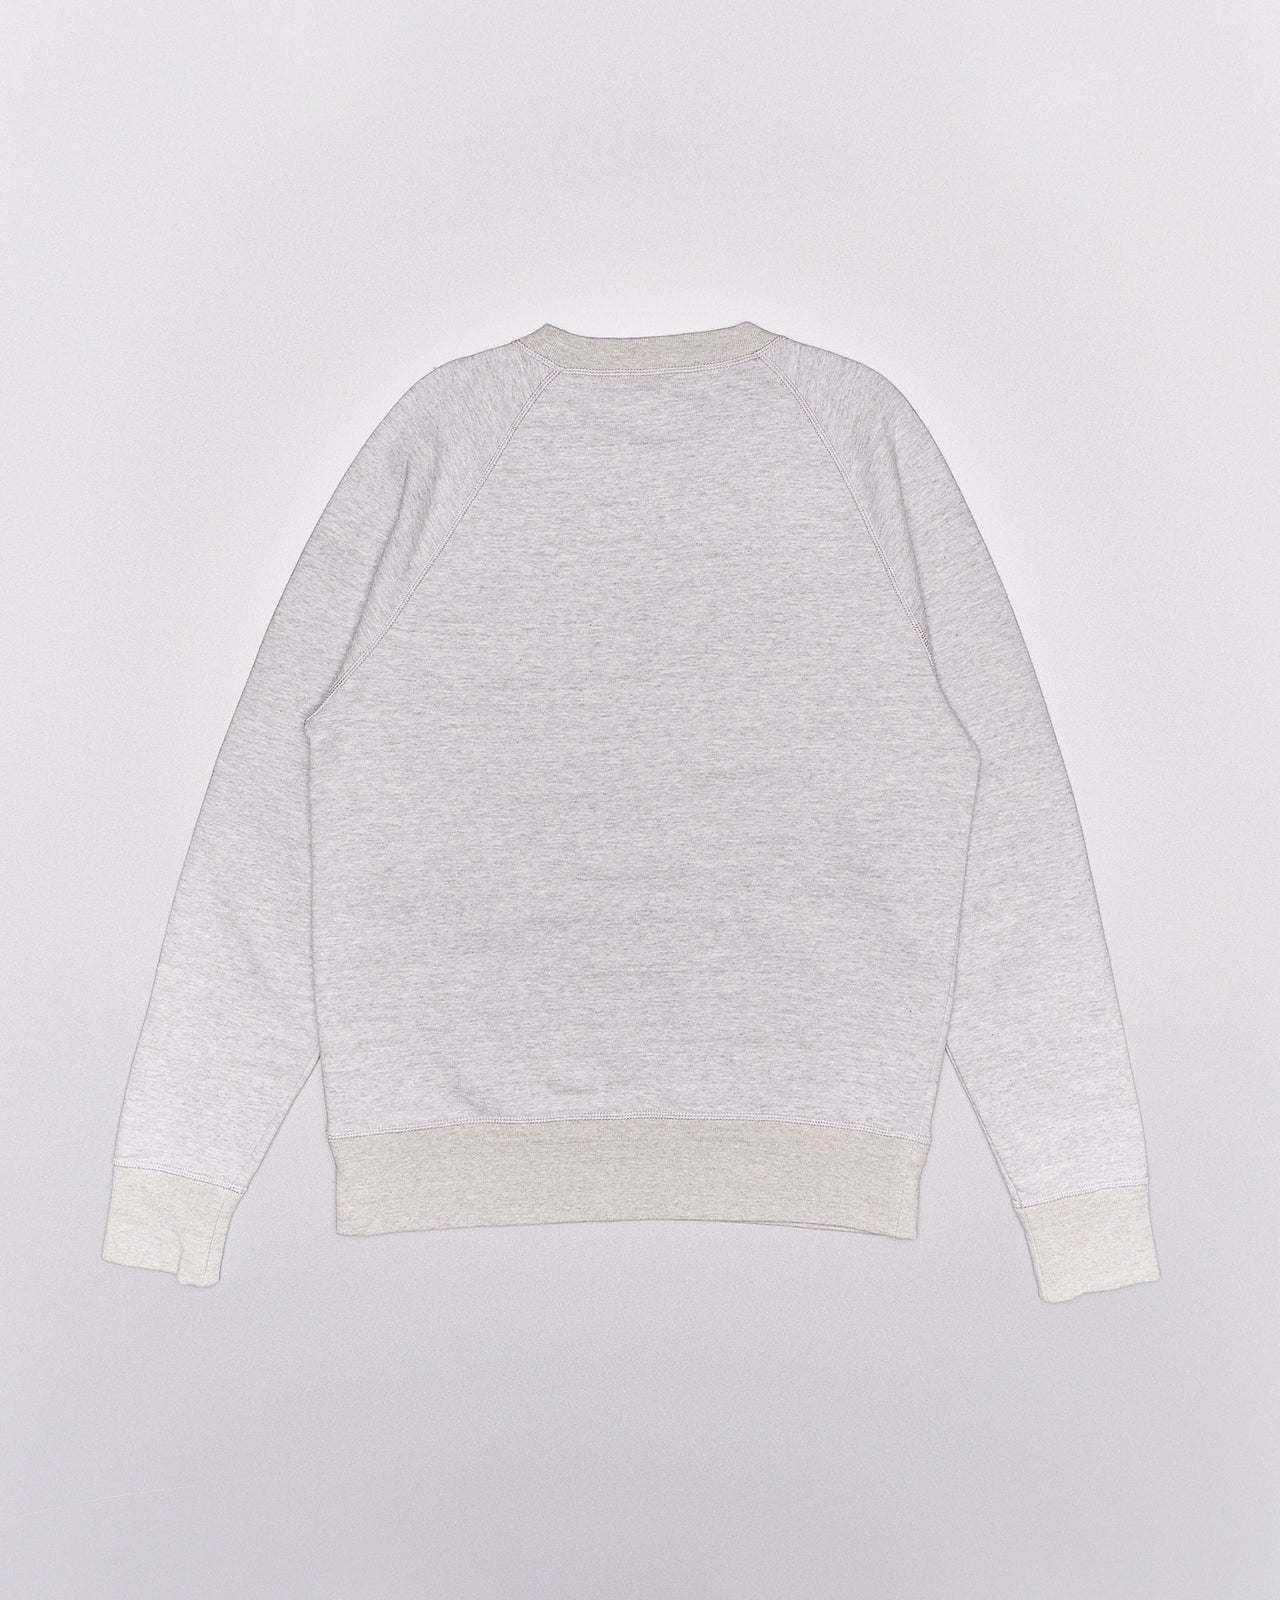 Louis Vuitton Japan exclusive upside down embroidered logo sweatshirt